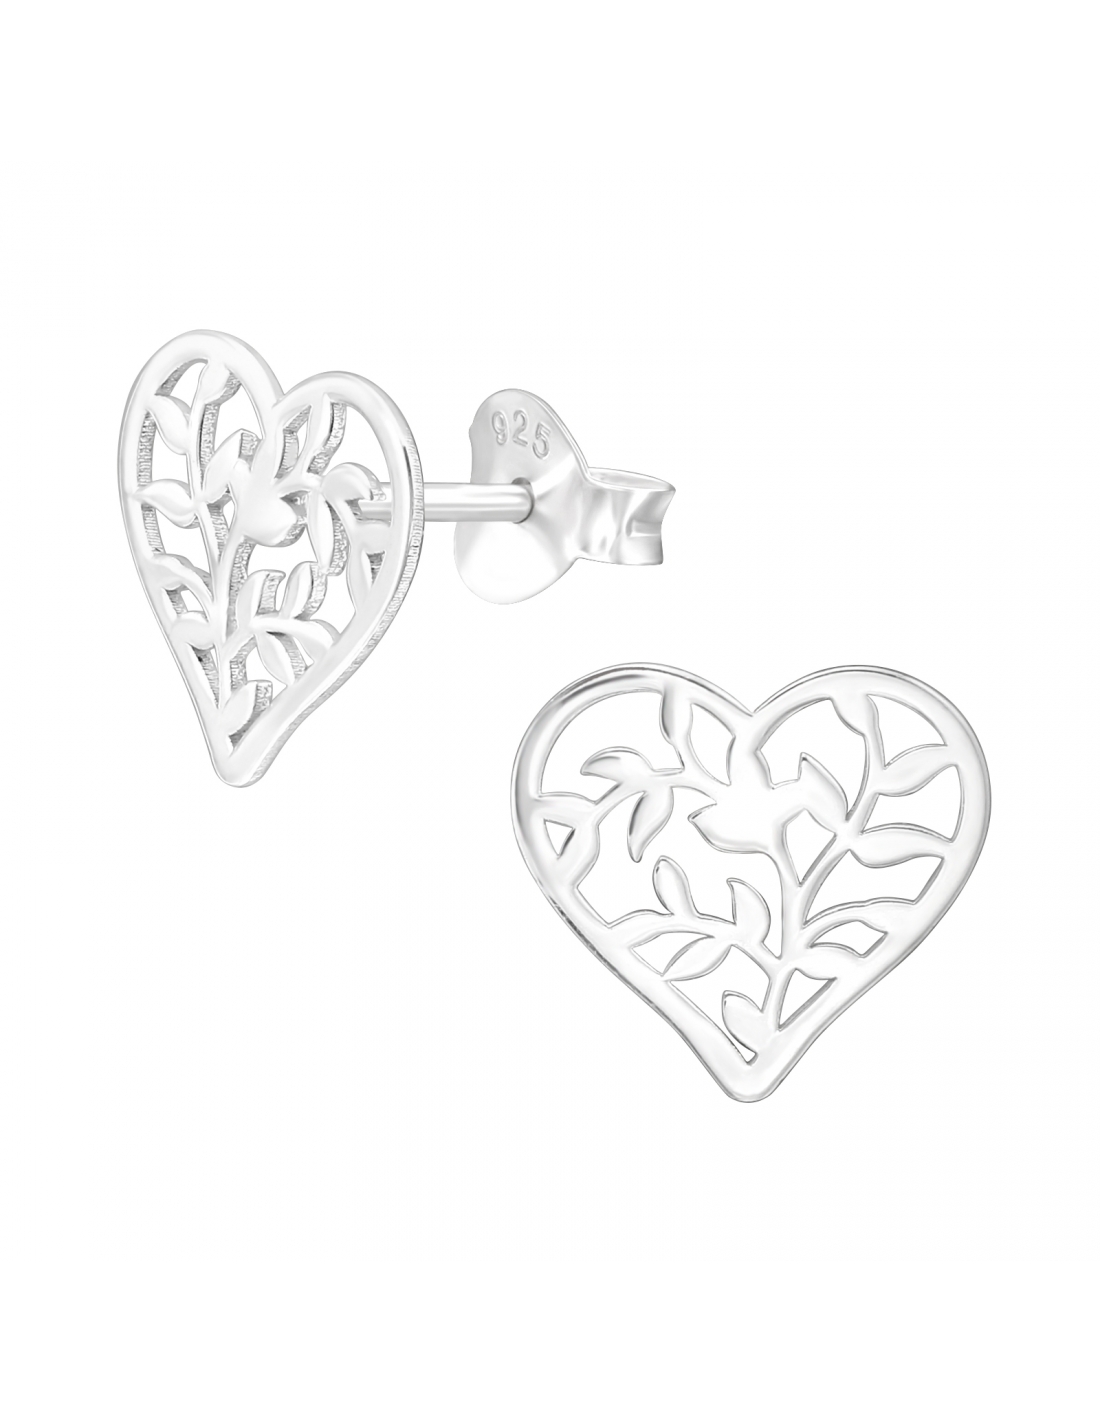 Aros de plata de corazon 10mm